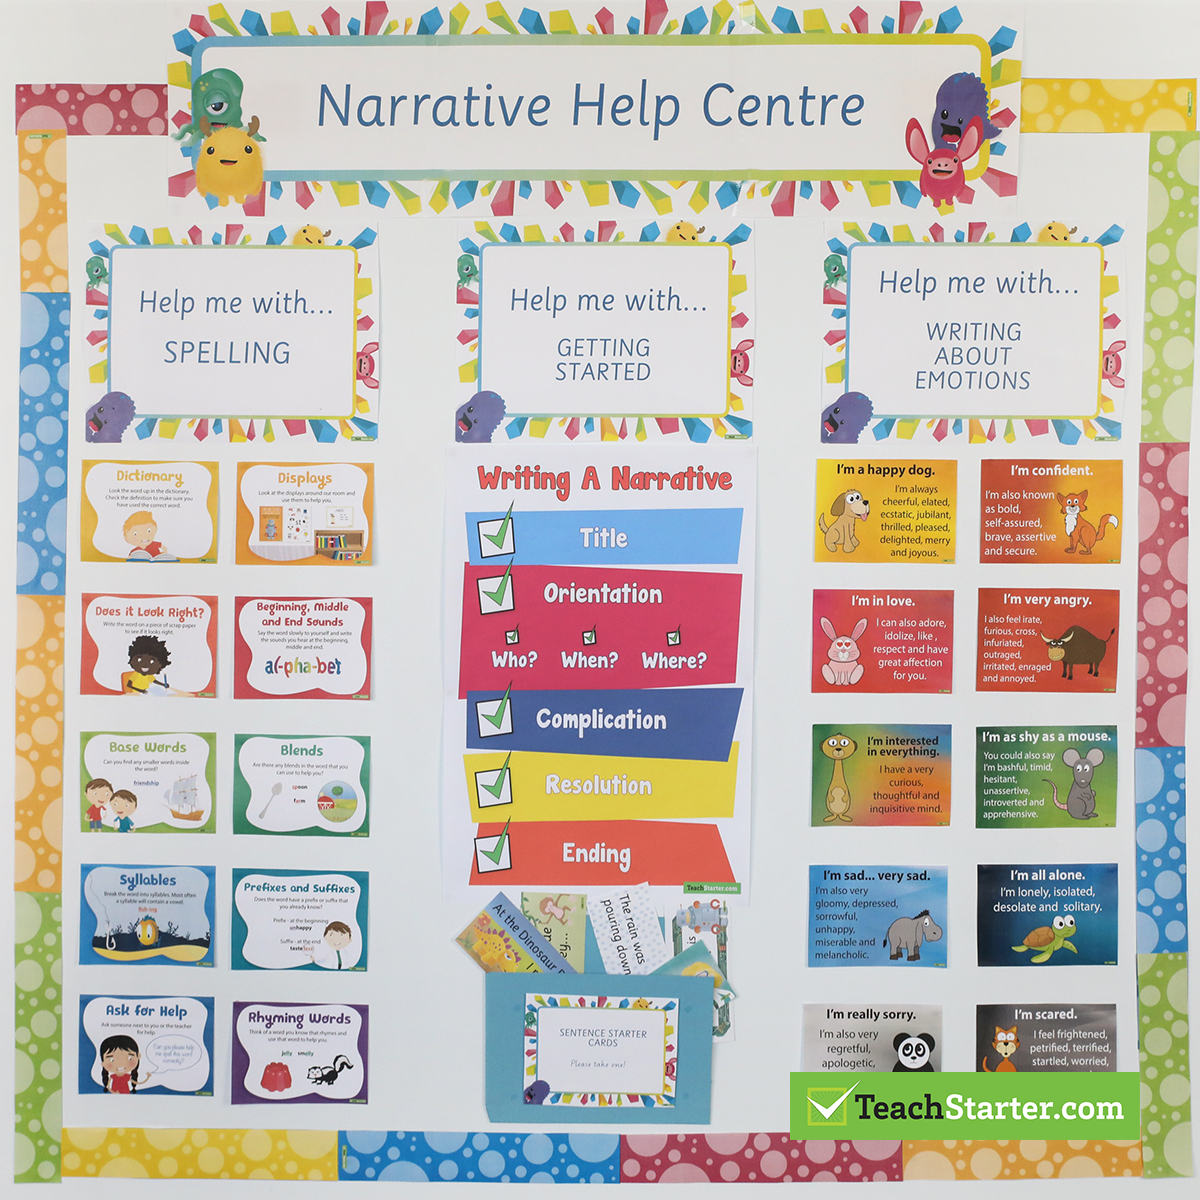 A Narrative Writing Help Centre classroom display idea